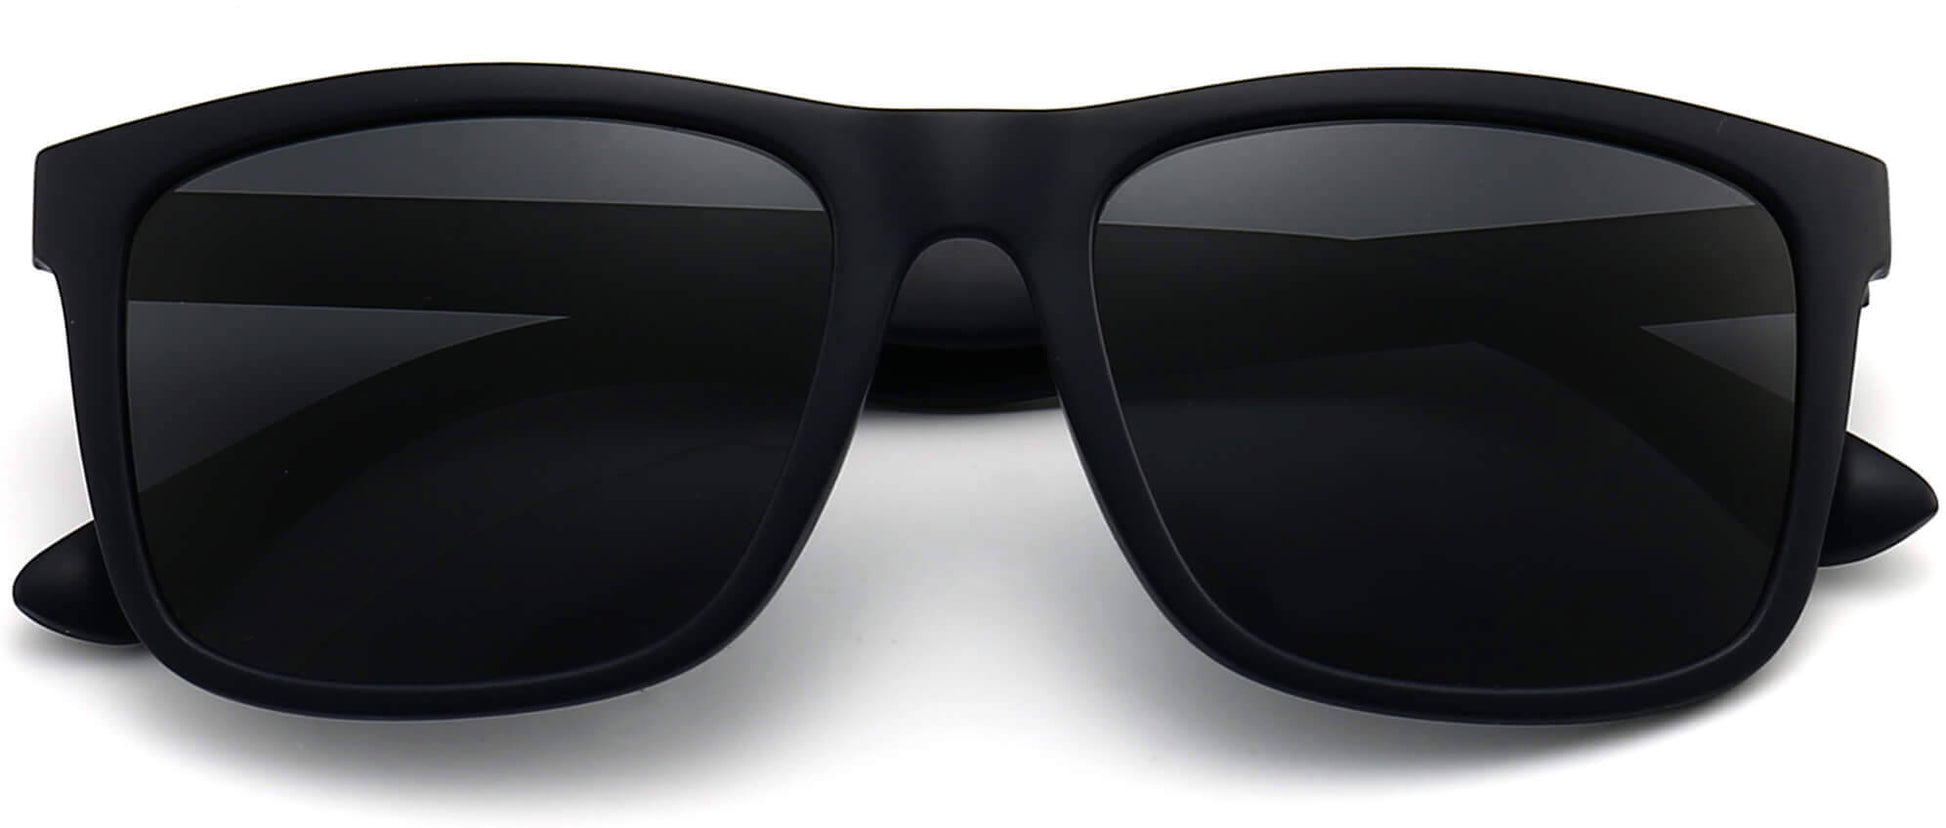 Zion Blue Plastic Sunglasses from ANRRI, closed view